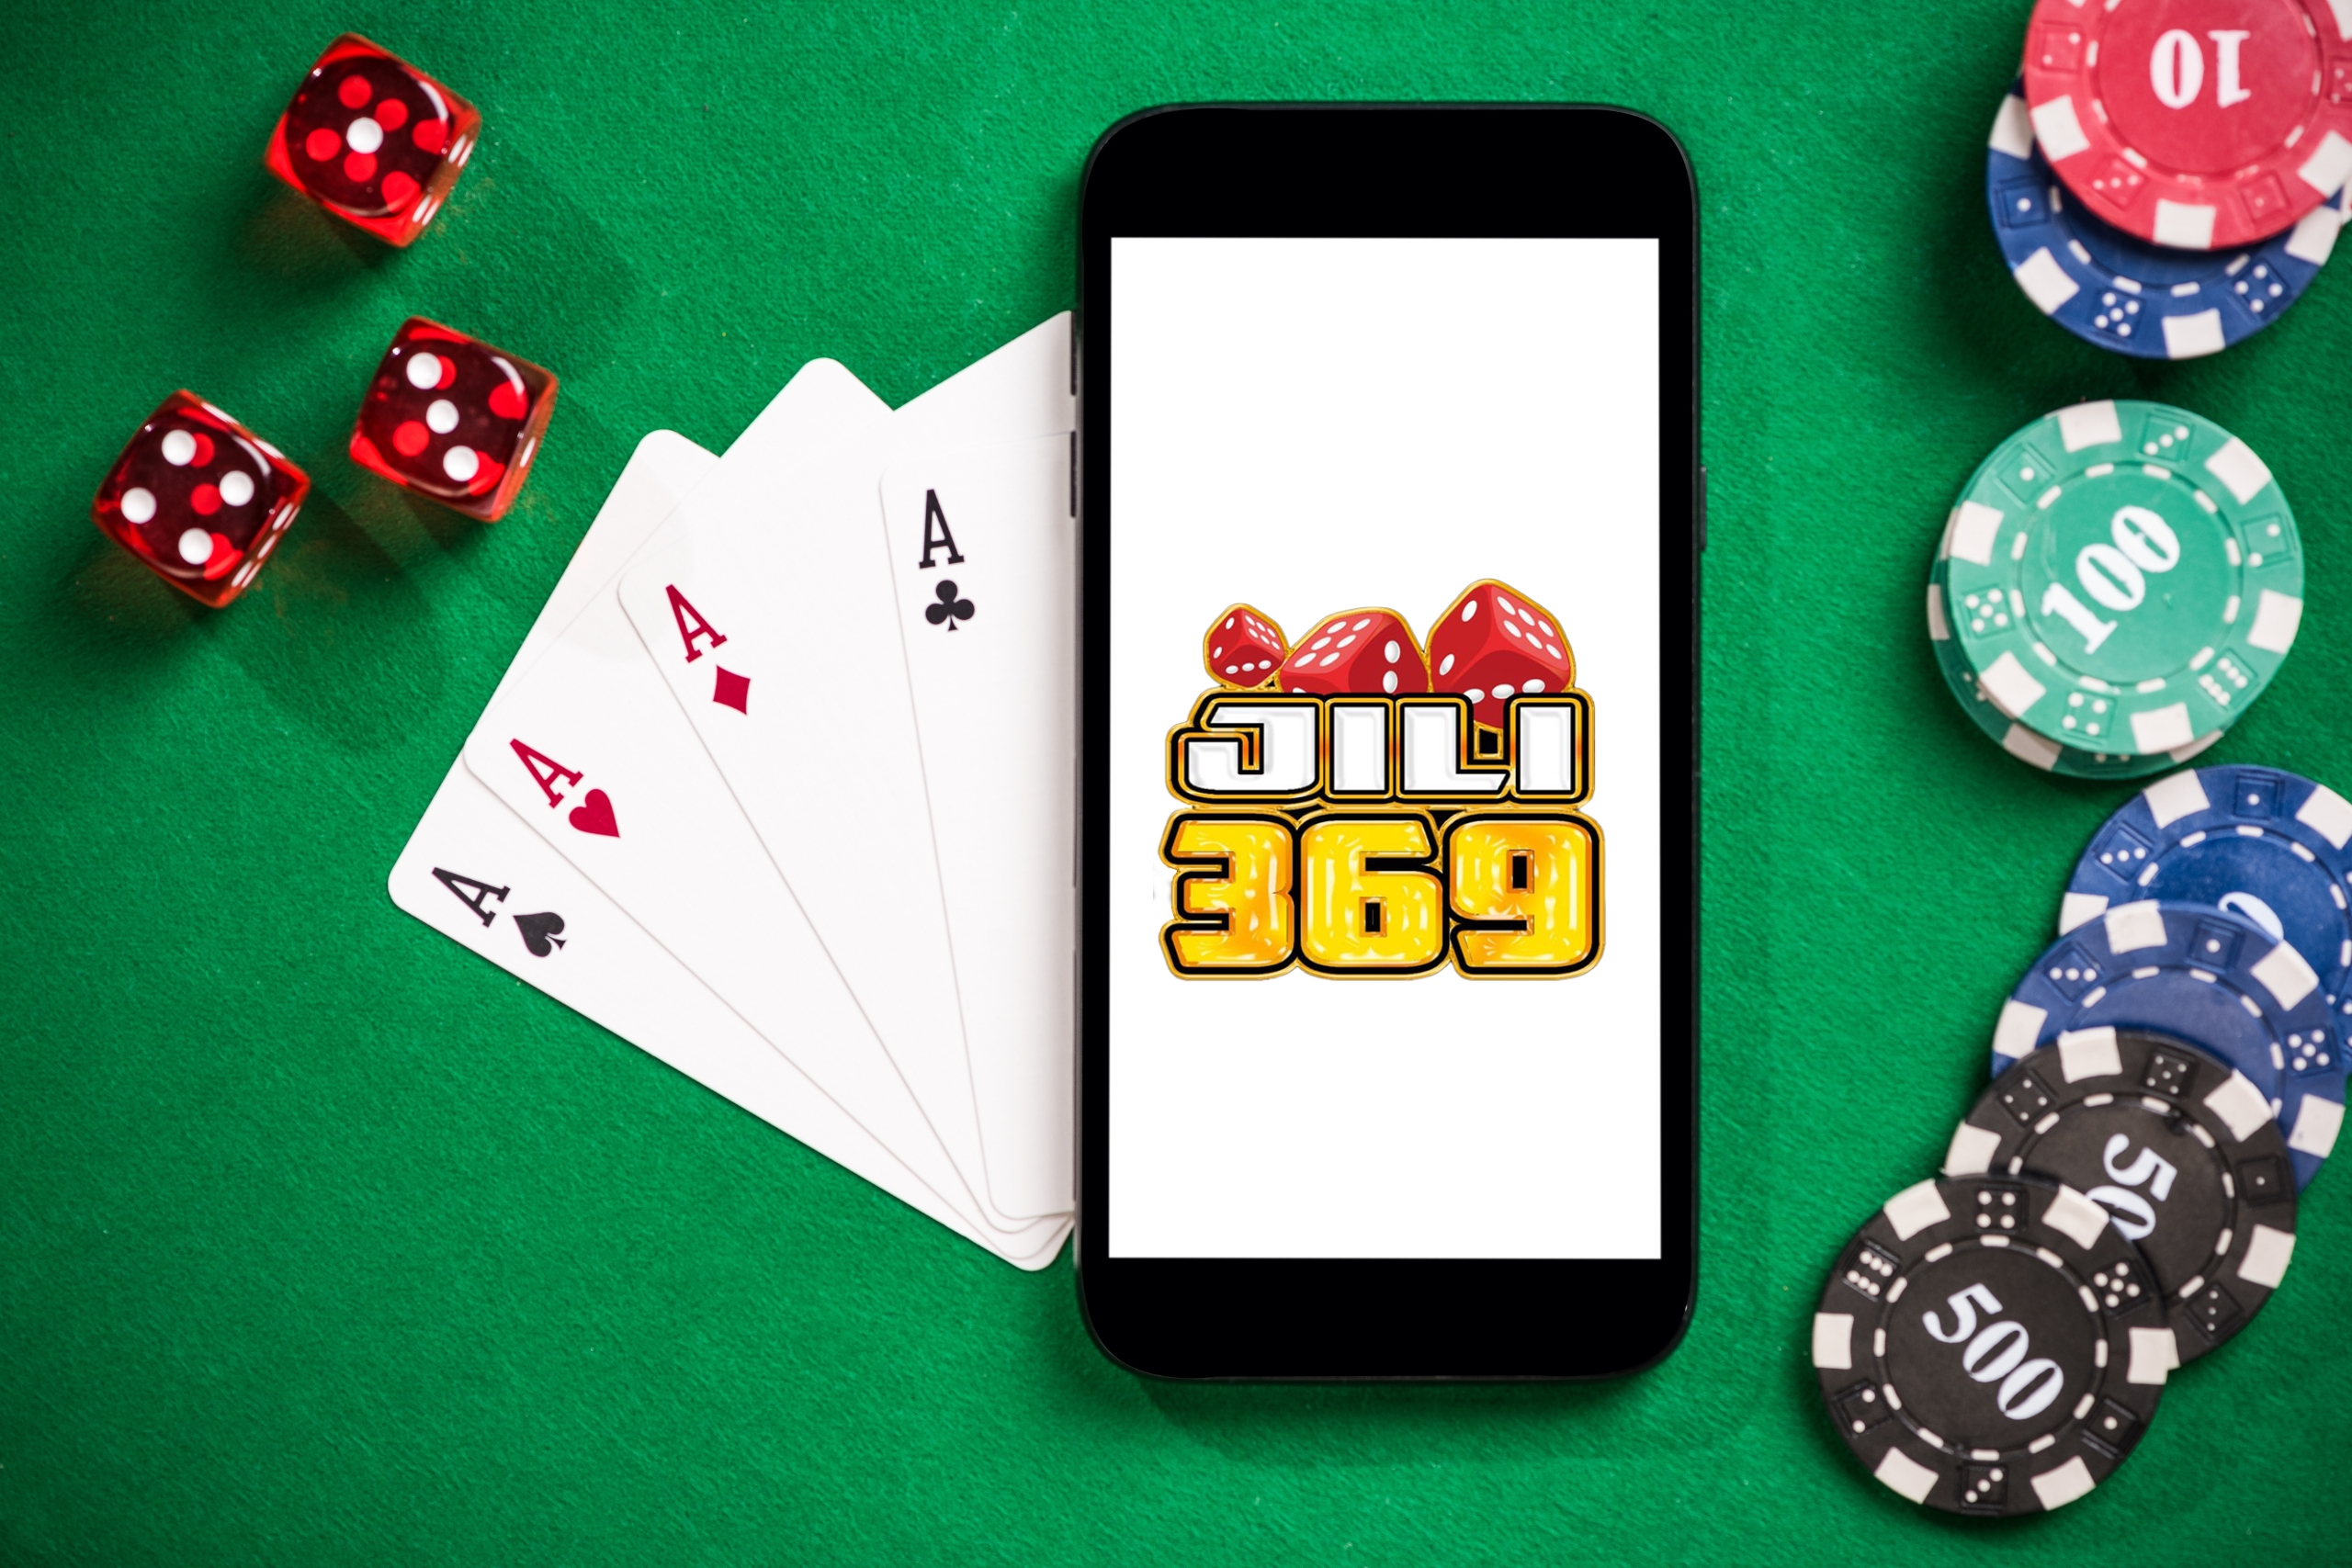 Jilino1 Com Login: Play Online Casino Game In Your Phone